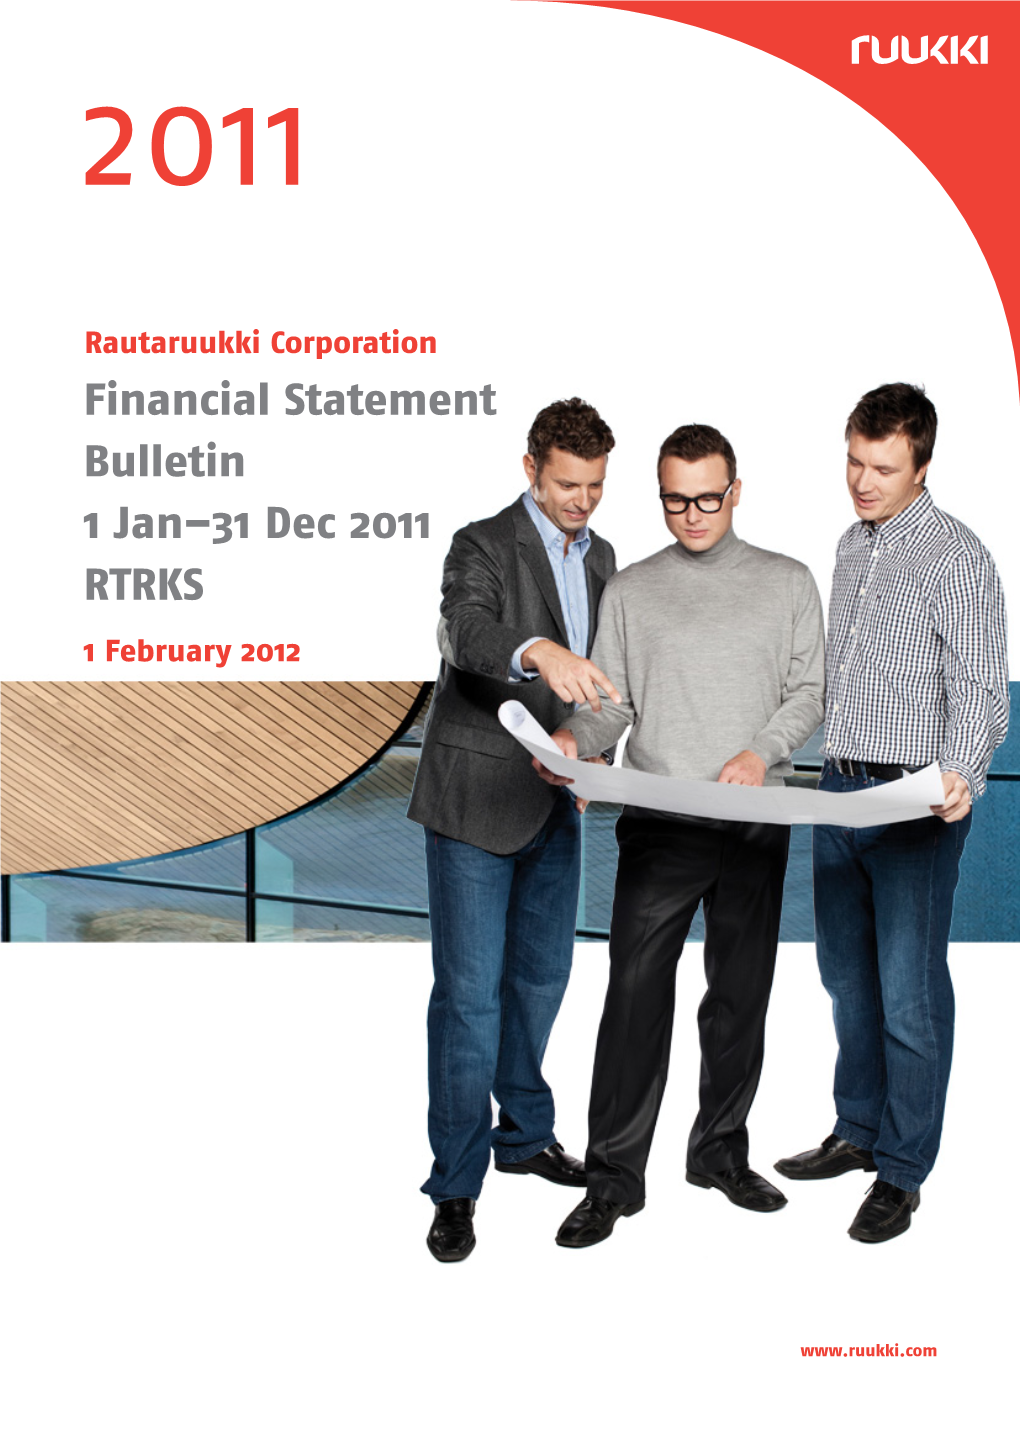 Rautaruukki Financial Statement Bulletin 2011